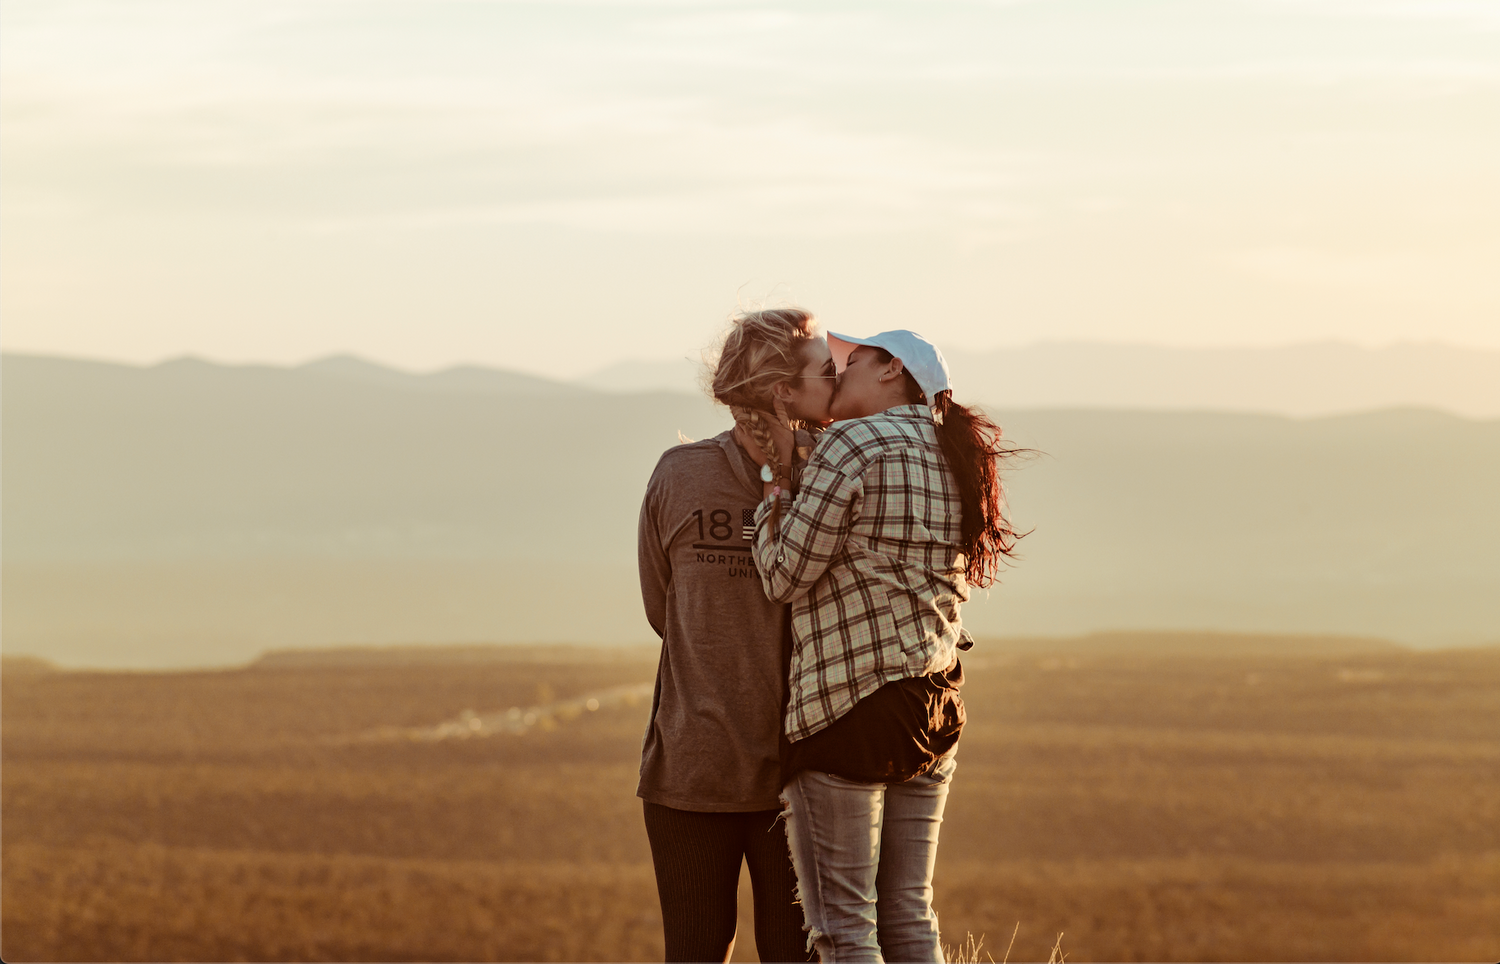 Lesbian Women in camping apparel kissing